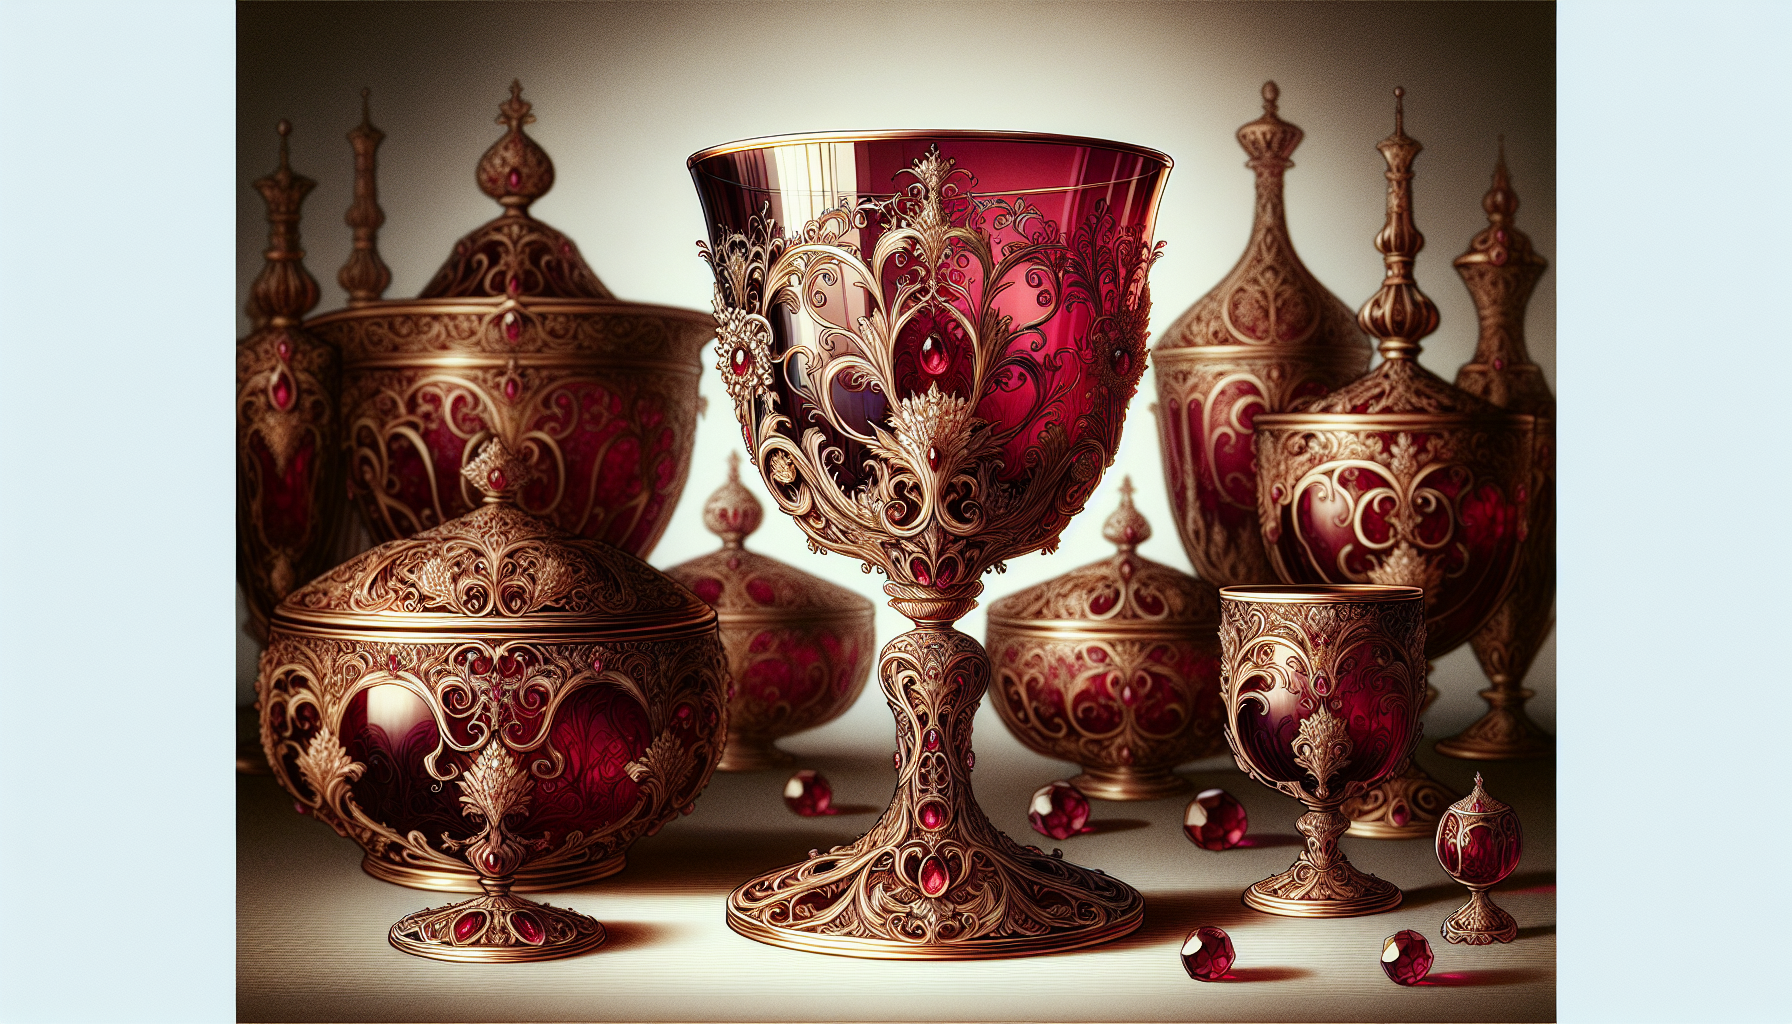 Renaissance luxurious glassware